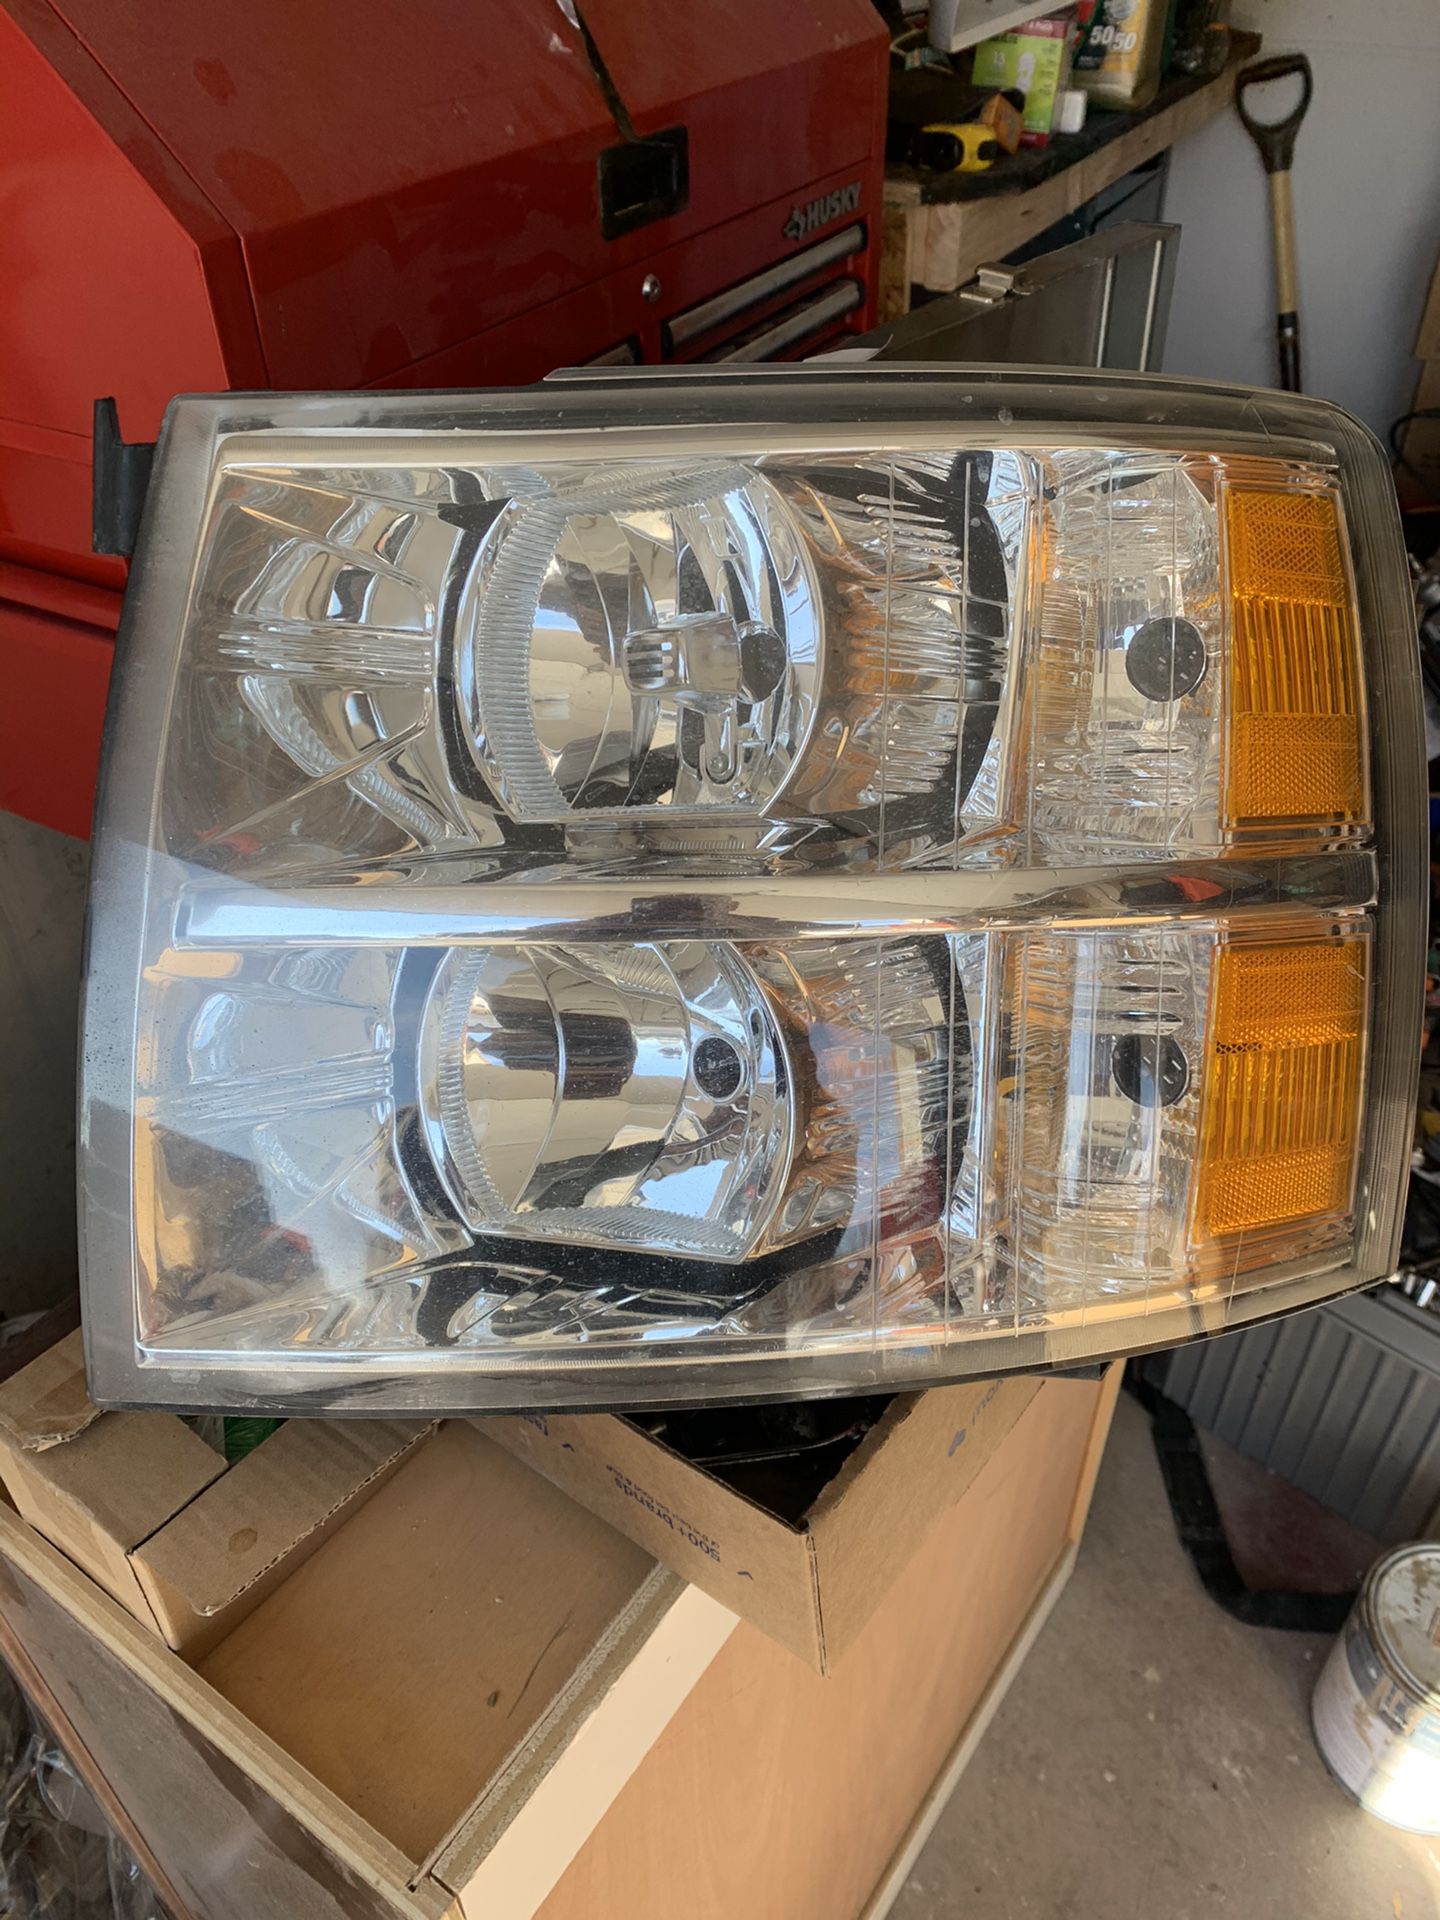 10’ Silverado Chevy 2500Hd driver side headlight. N